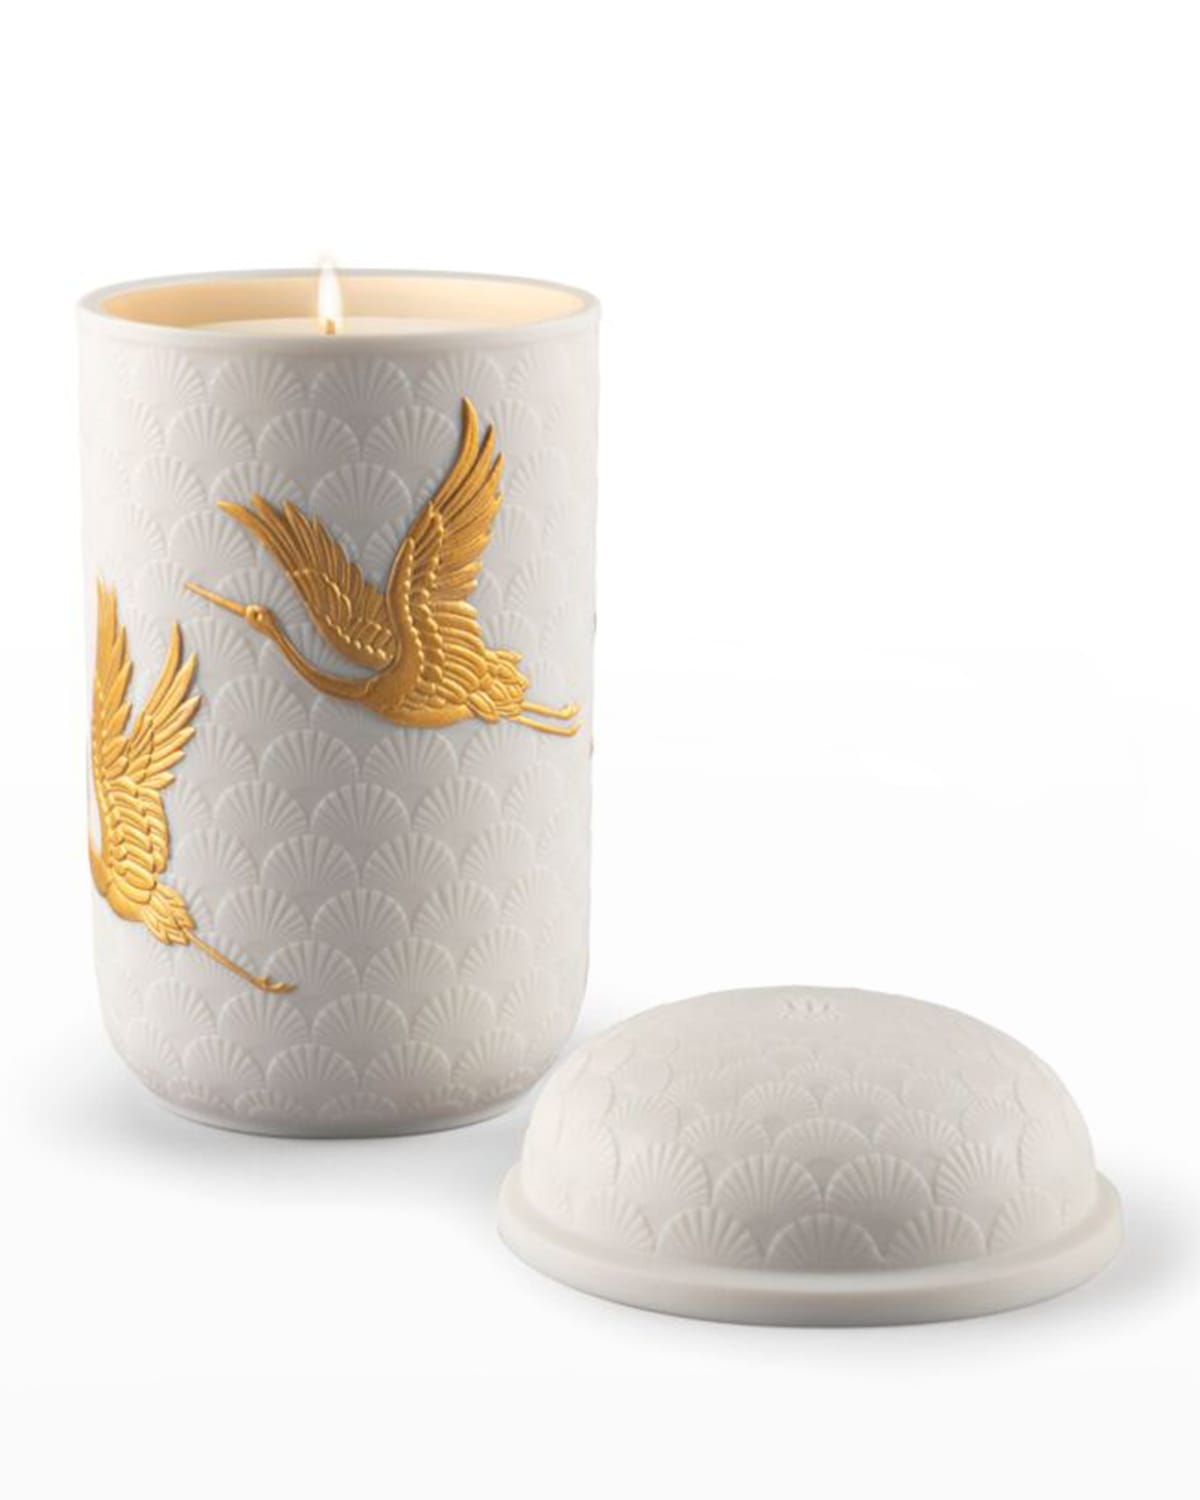 Golden Cranes Porcelain Candle